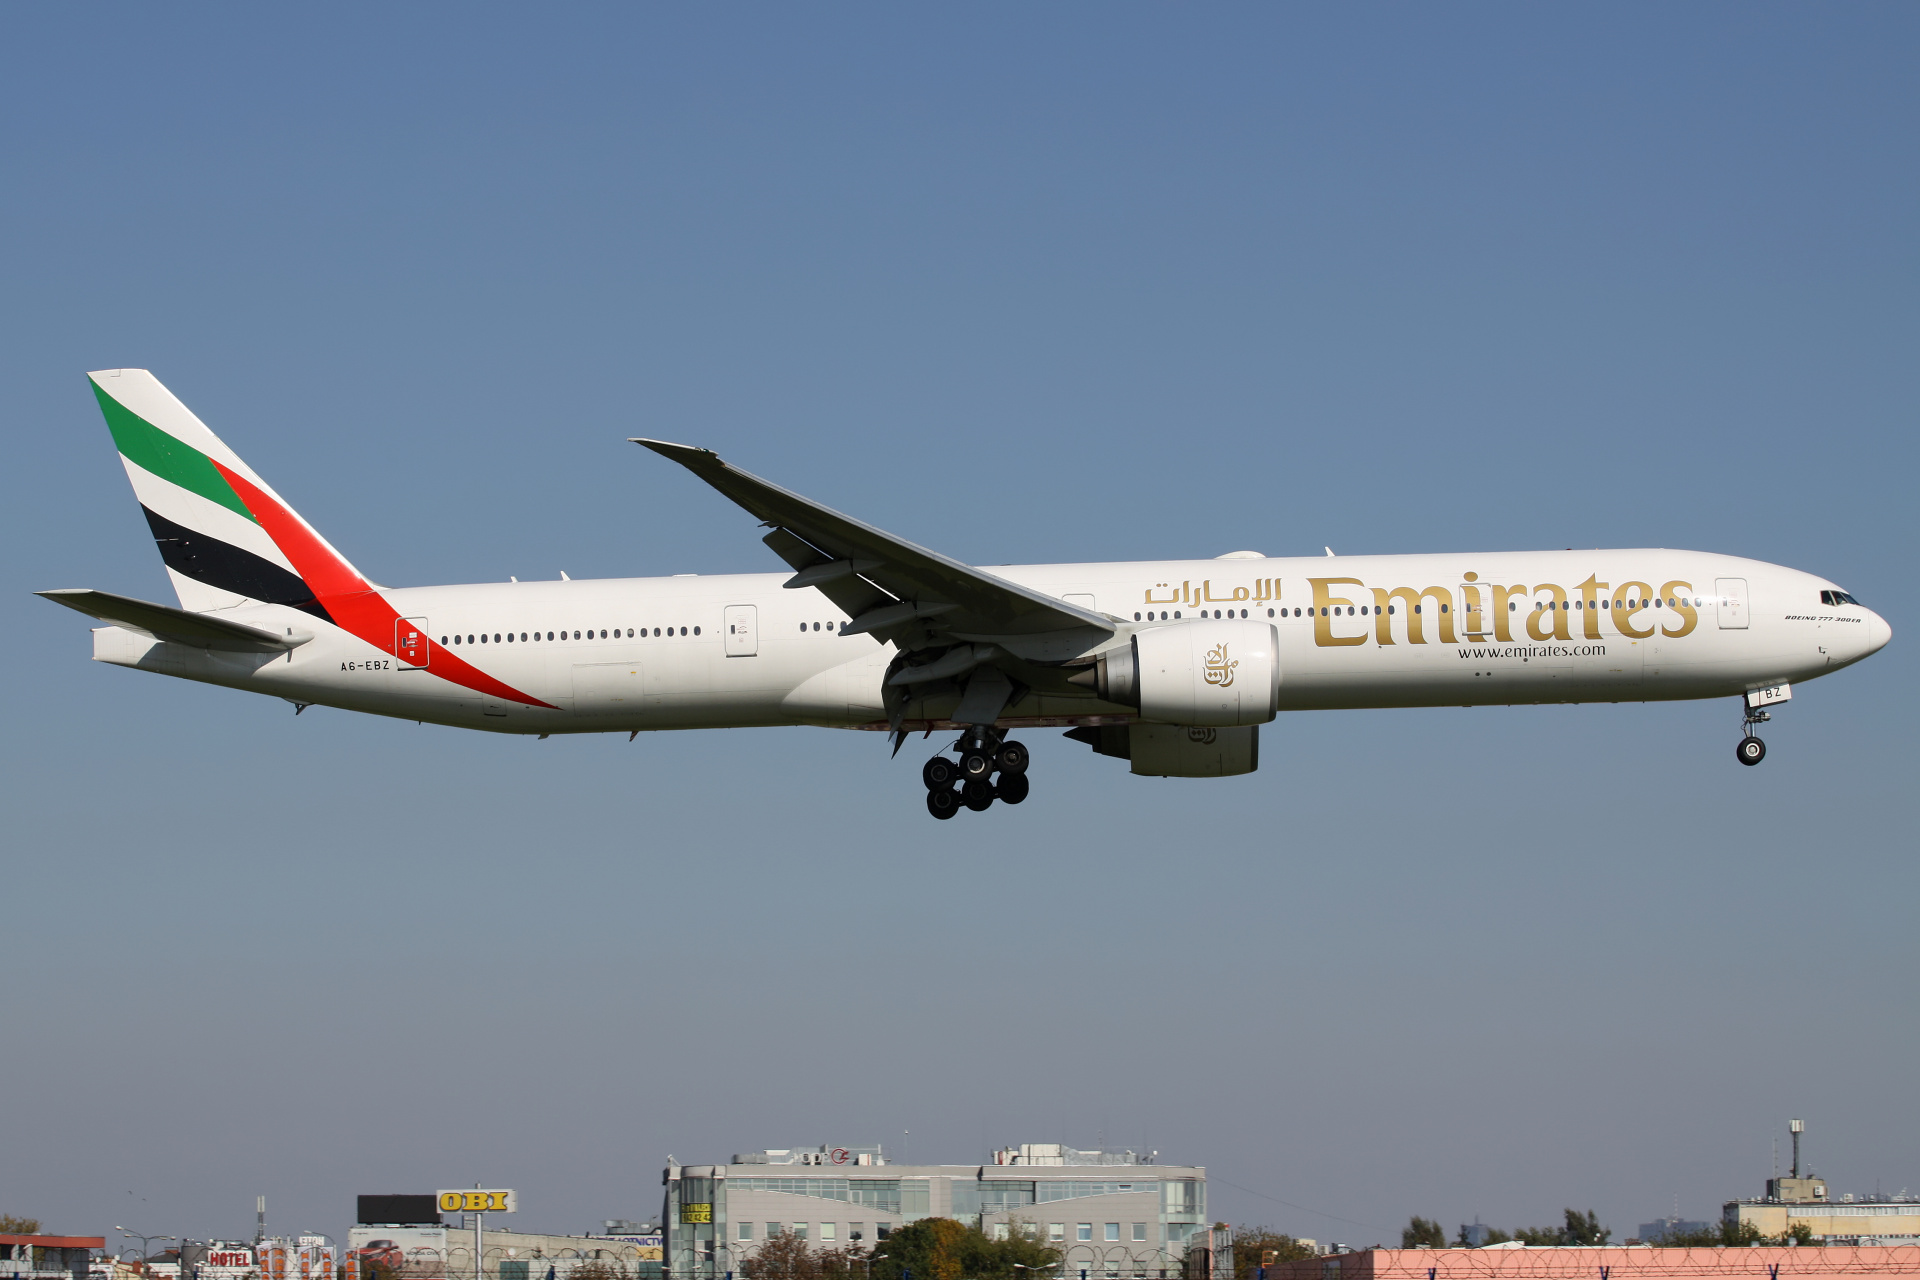 A6-EBZ (Aircraft » EPWA Spotting » Boeing 777-300ER » Emirates)